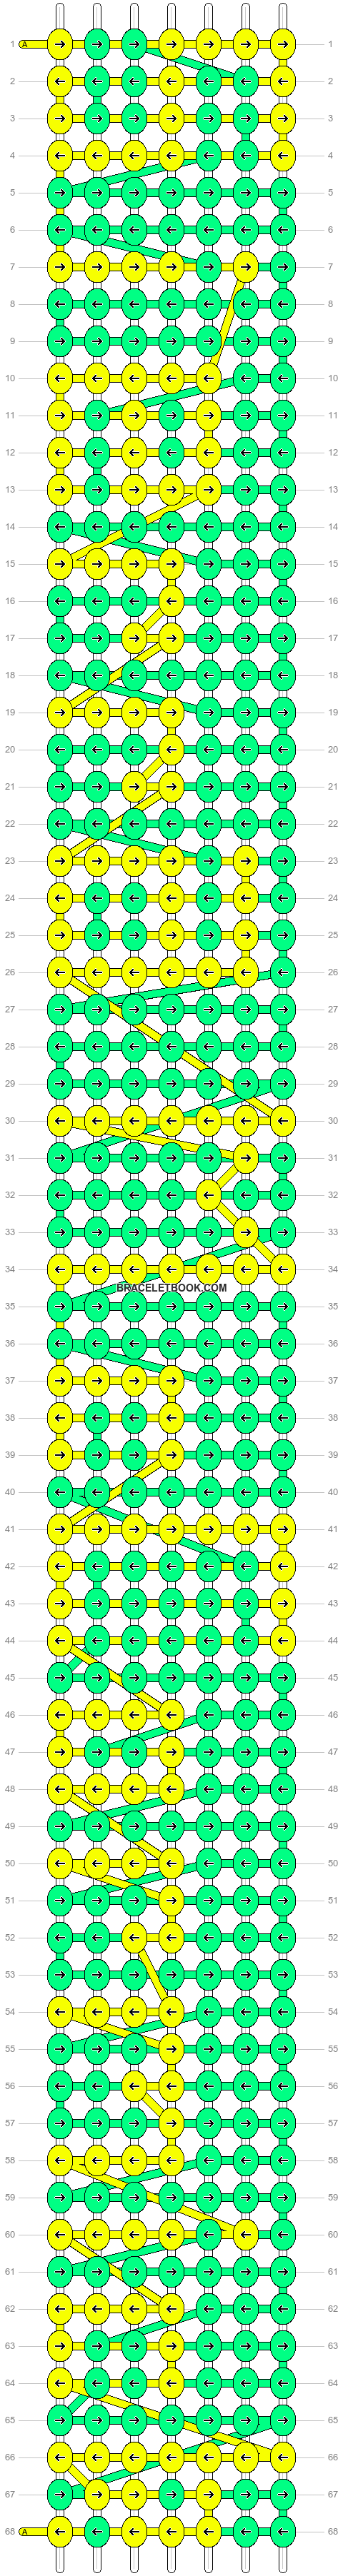 Alpha pattern #3183 pattern